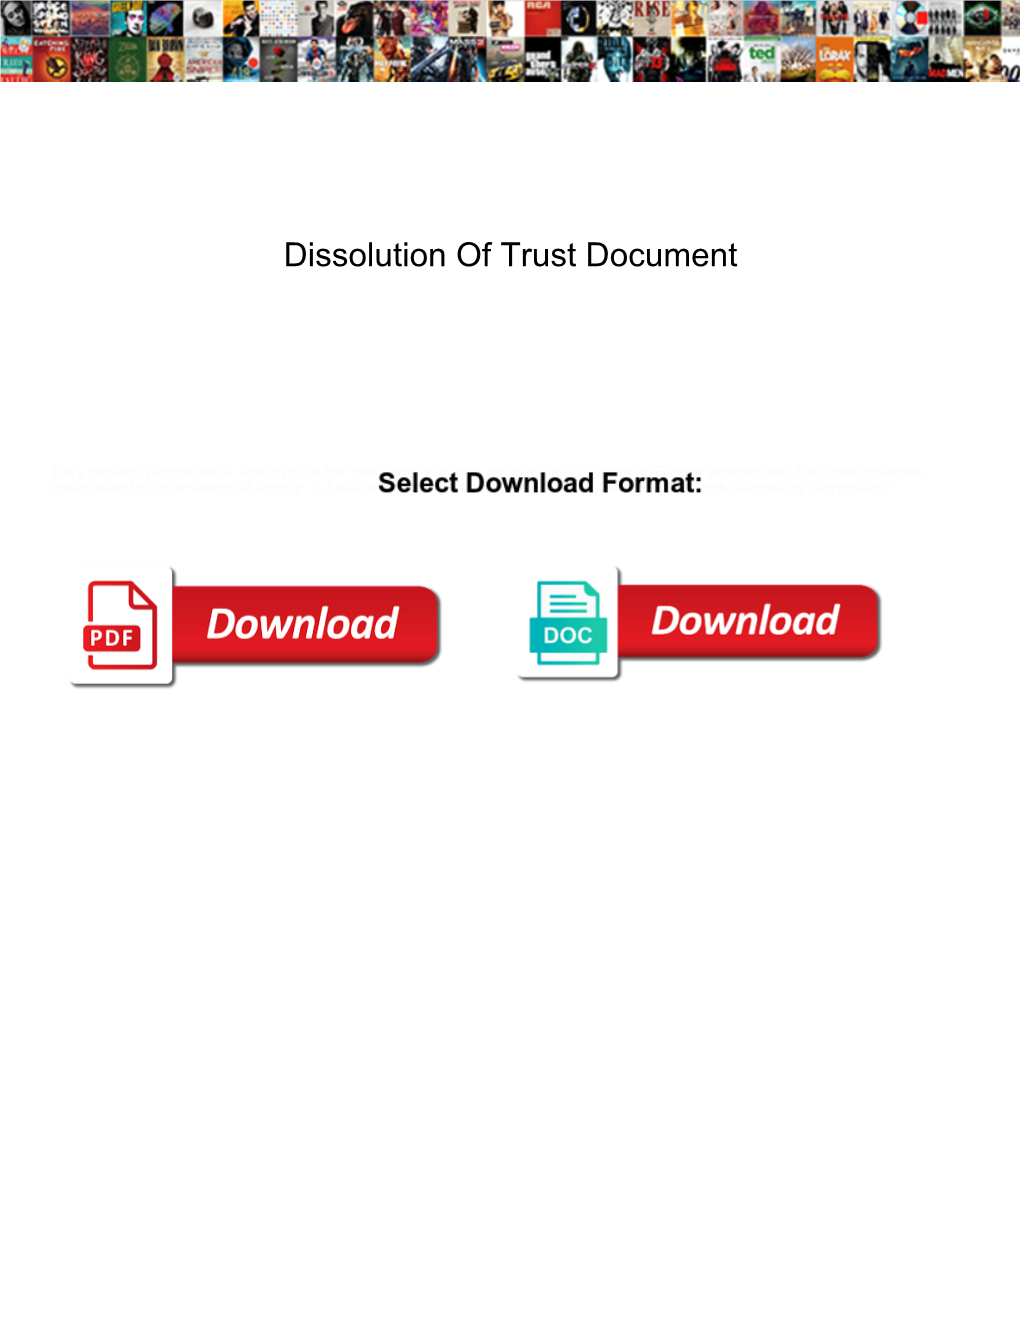 Dissolution of Trust Document